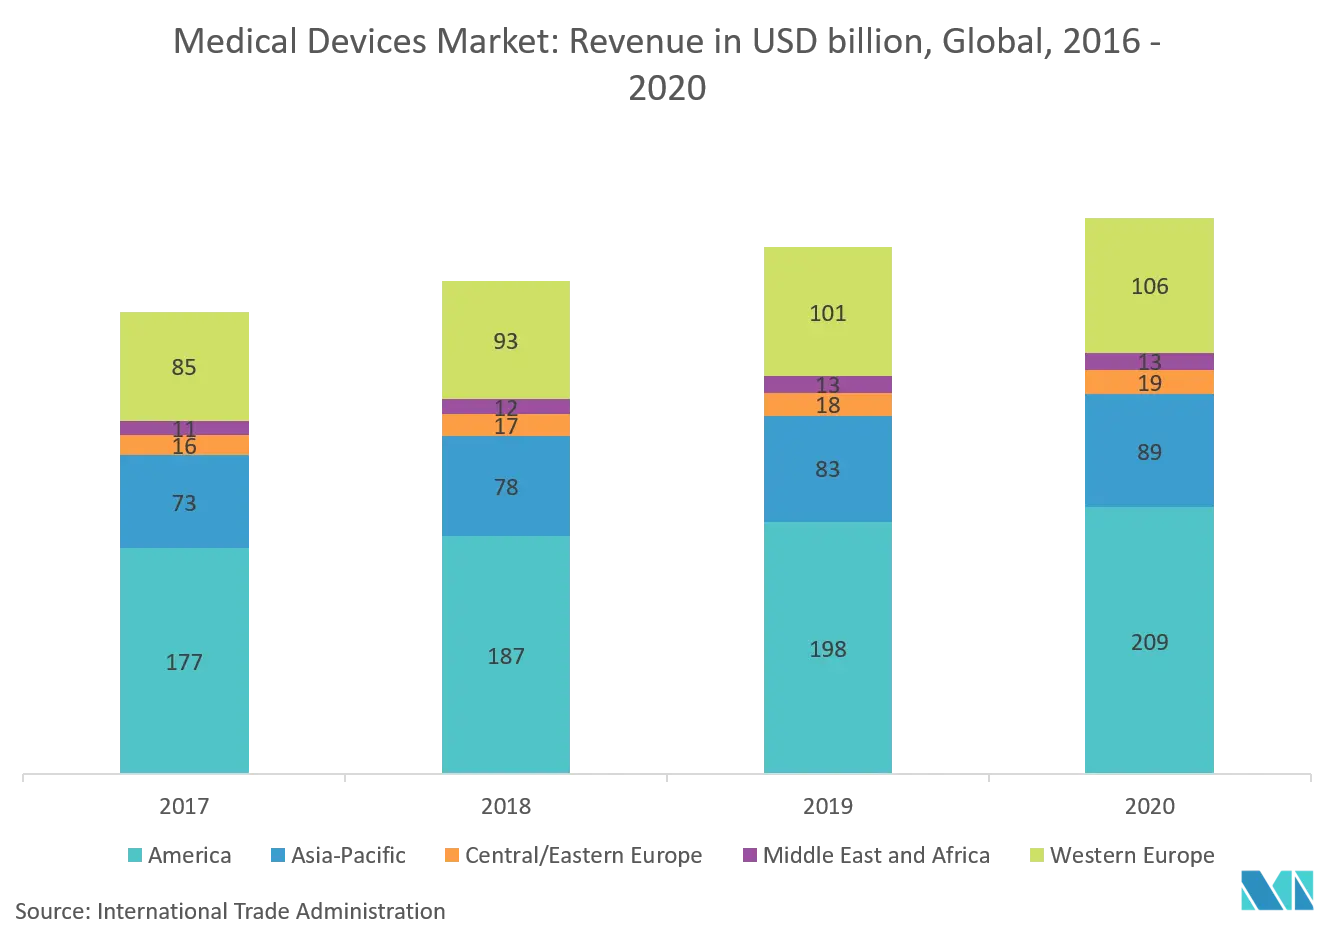 Medical Devices Market: Revenue in USD billion, Global, 2016 - 2020